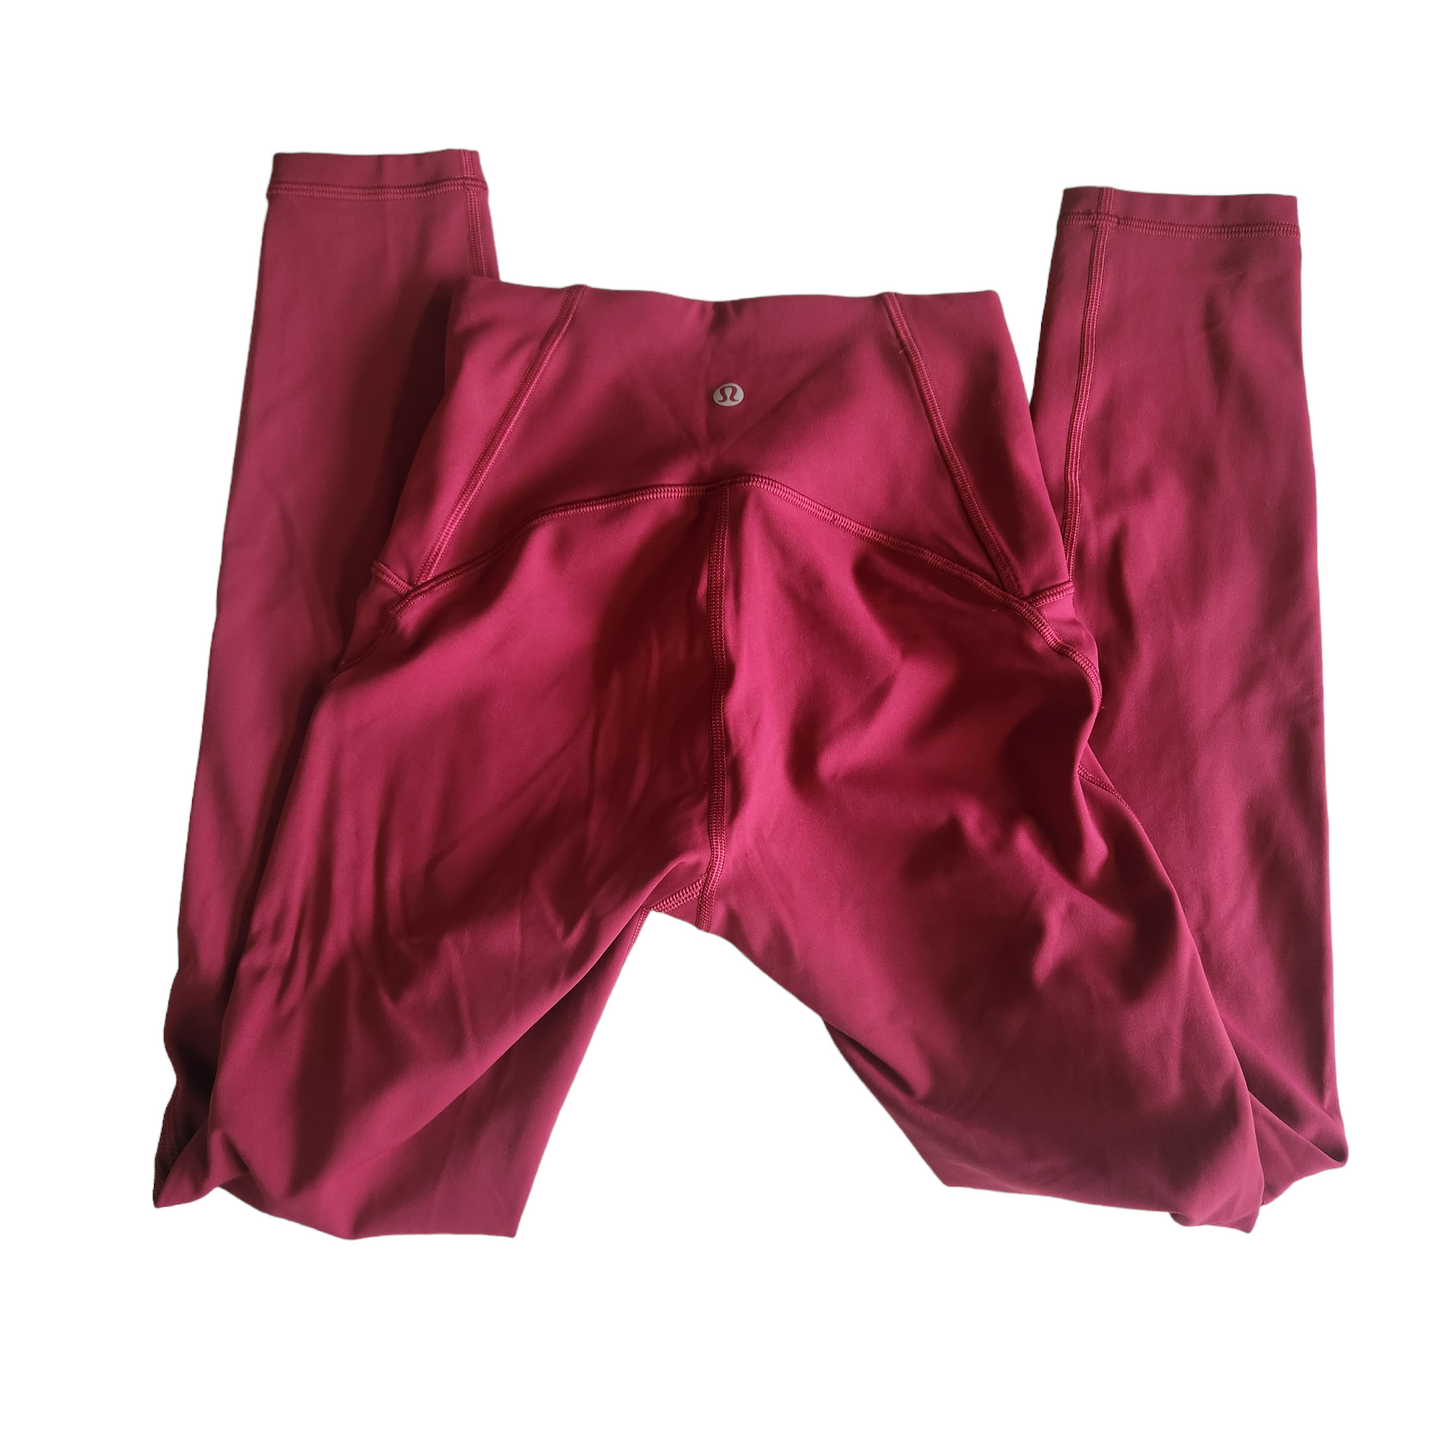 Lululemon Train Times 7/8 Women's Pants Star Ruby - Size 2